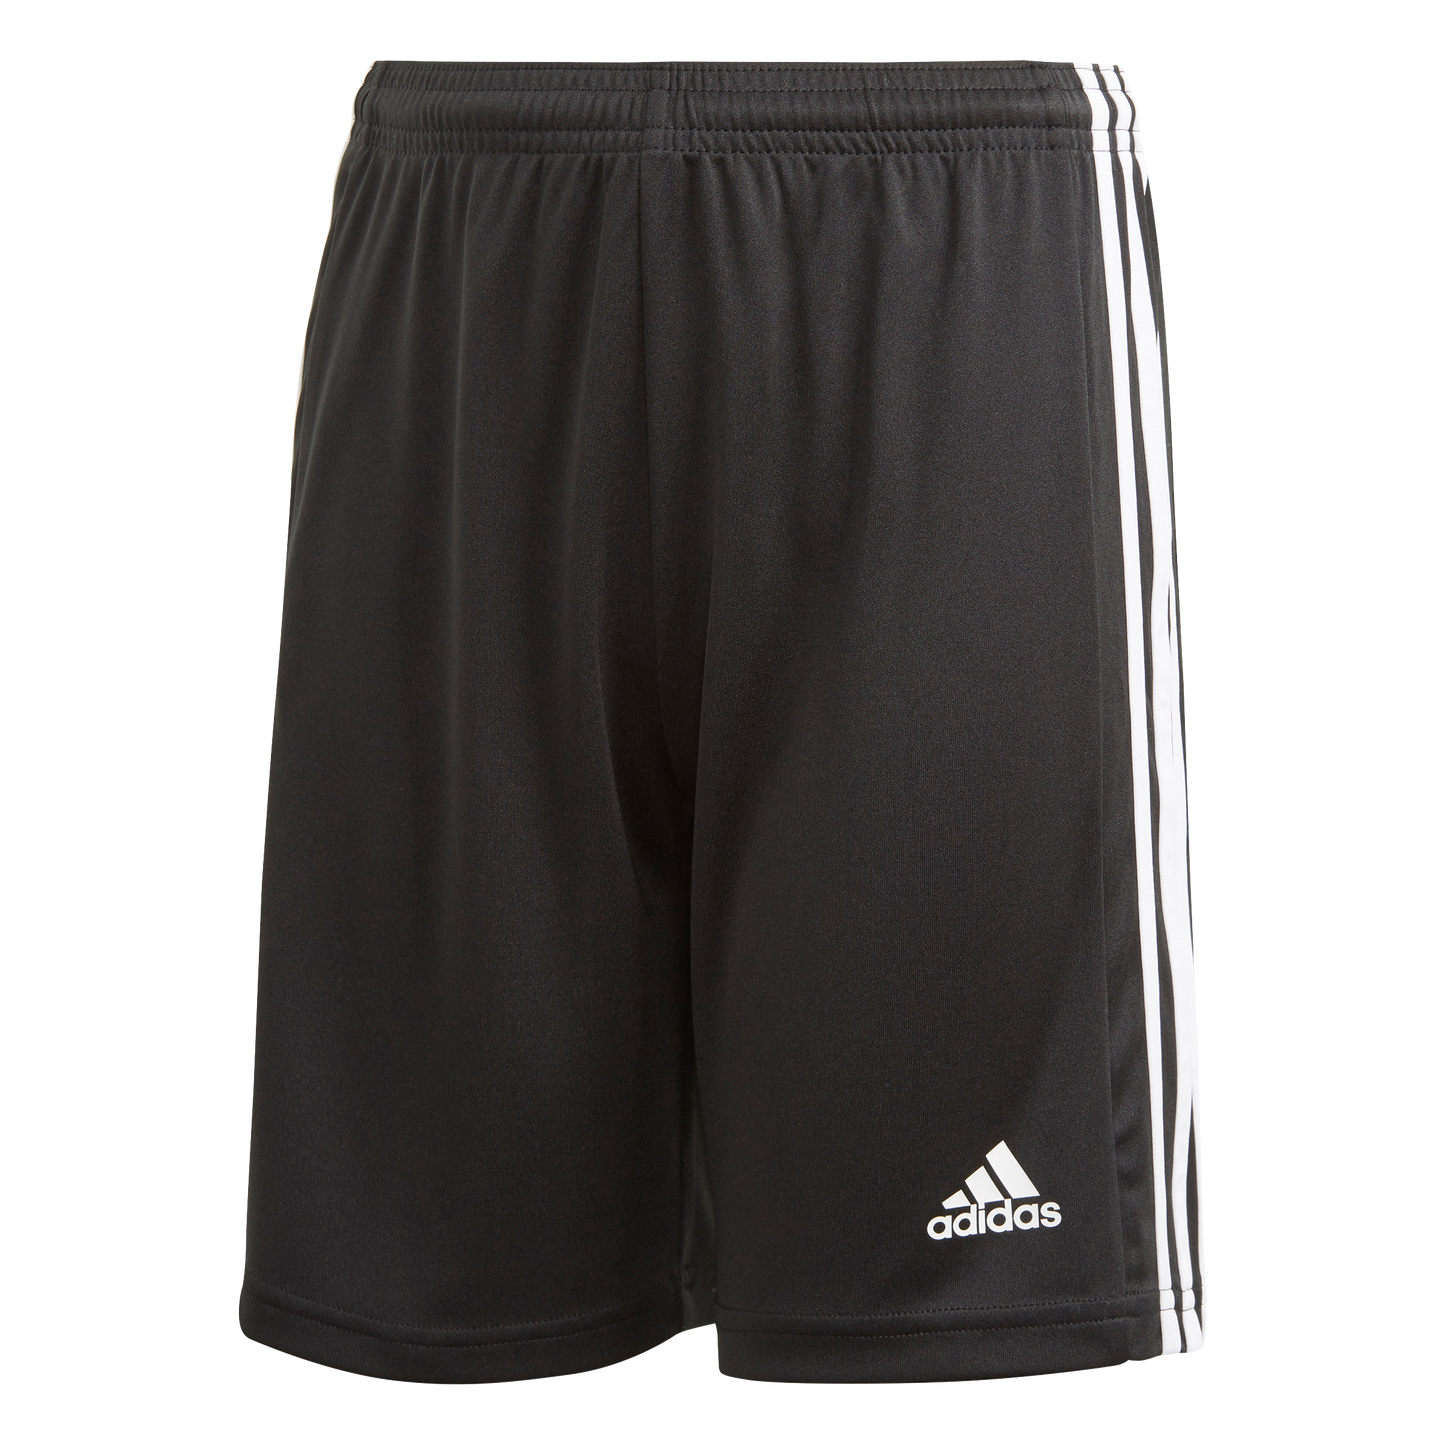 adidas Squadra 21 Men's Soccer Shorts Black